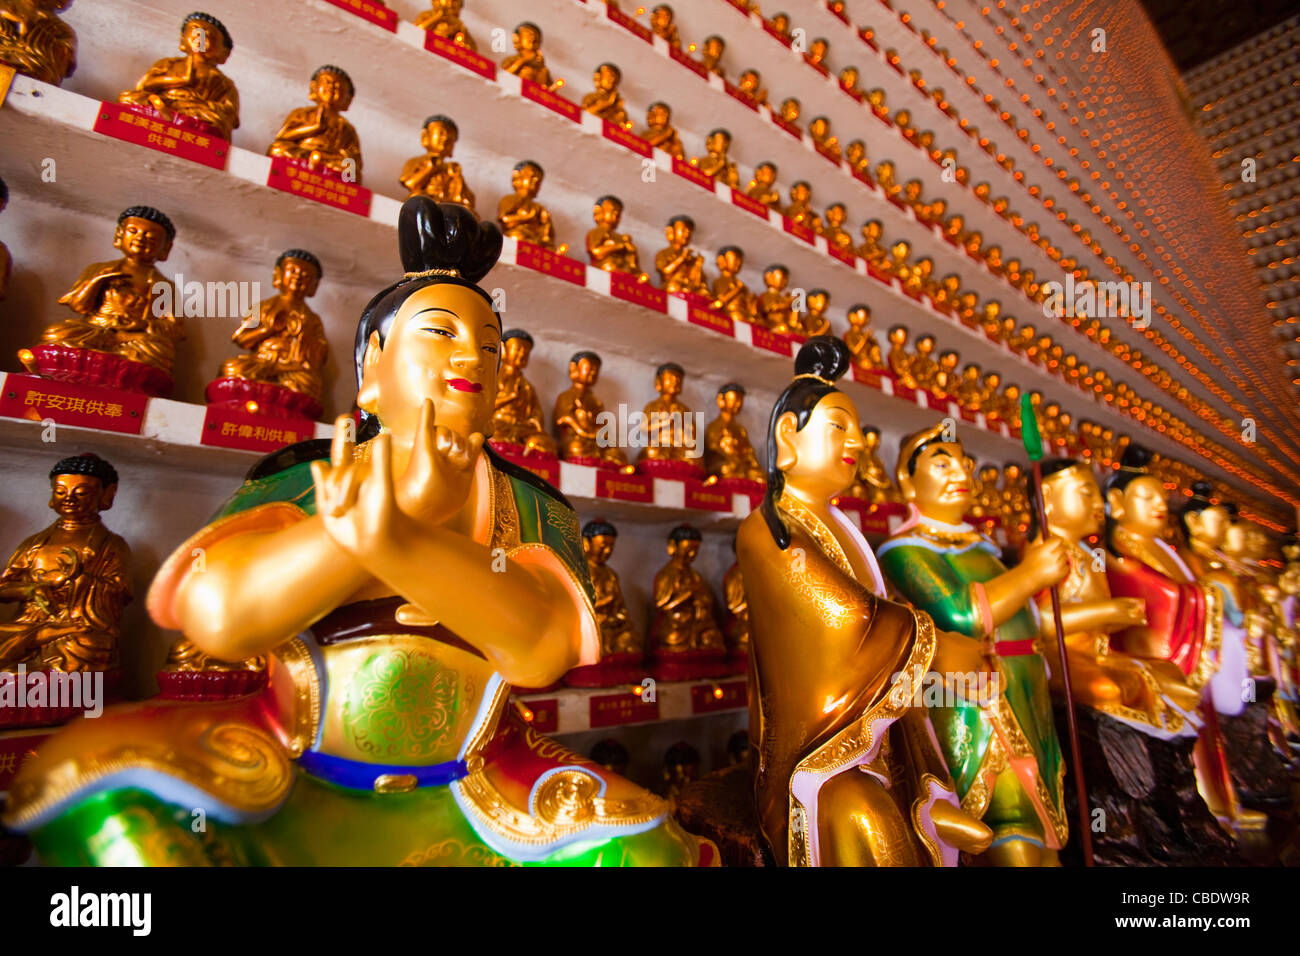 Colorful buddha statues in Chinese shop, Hong Kong, China Stock Photo